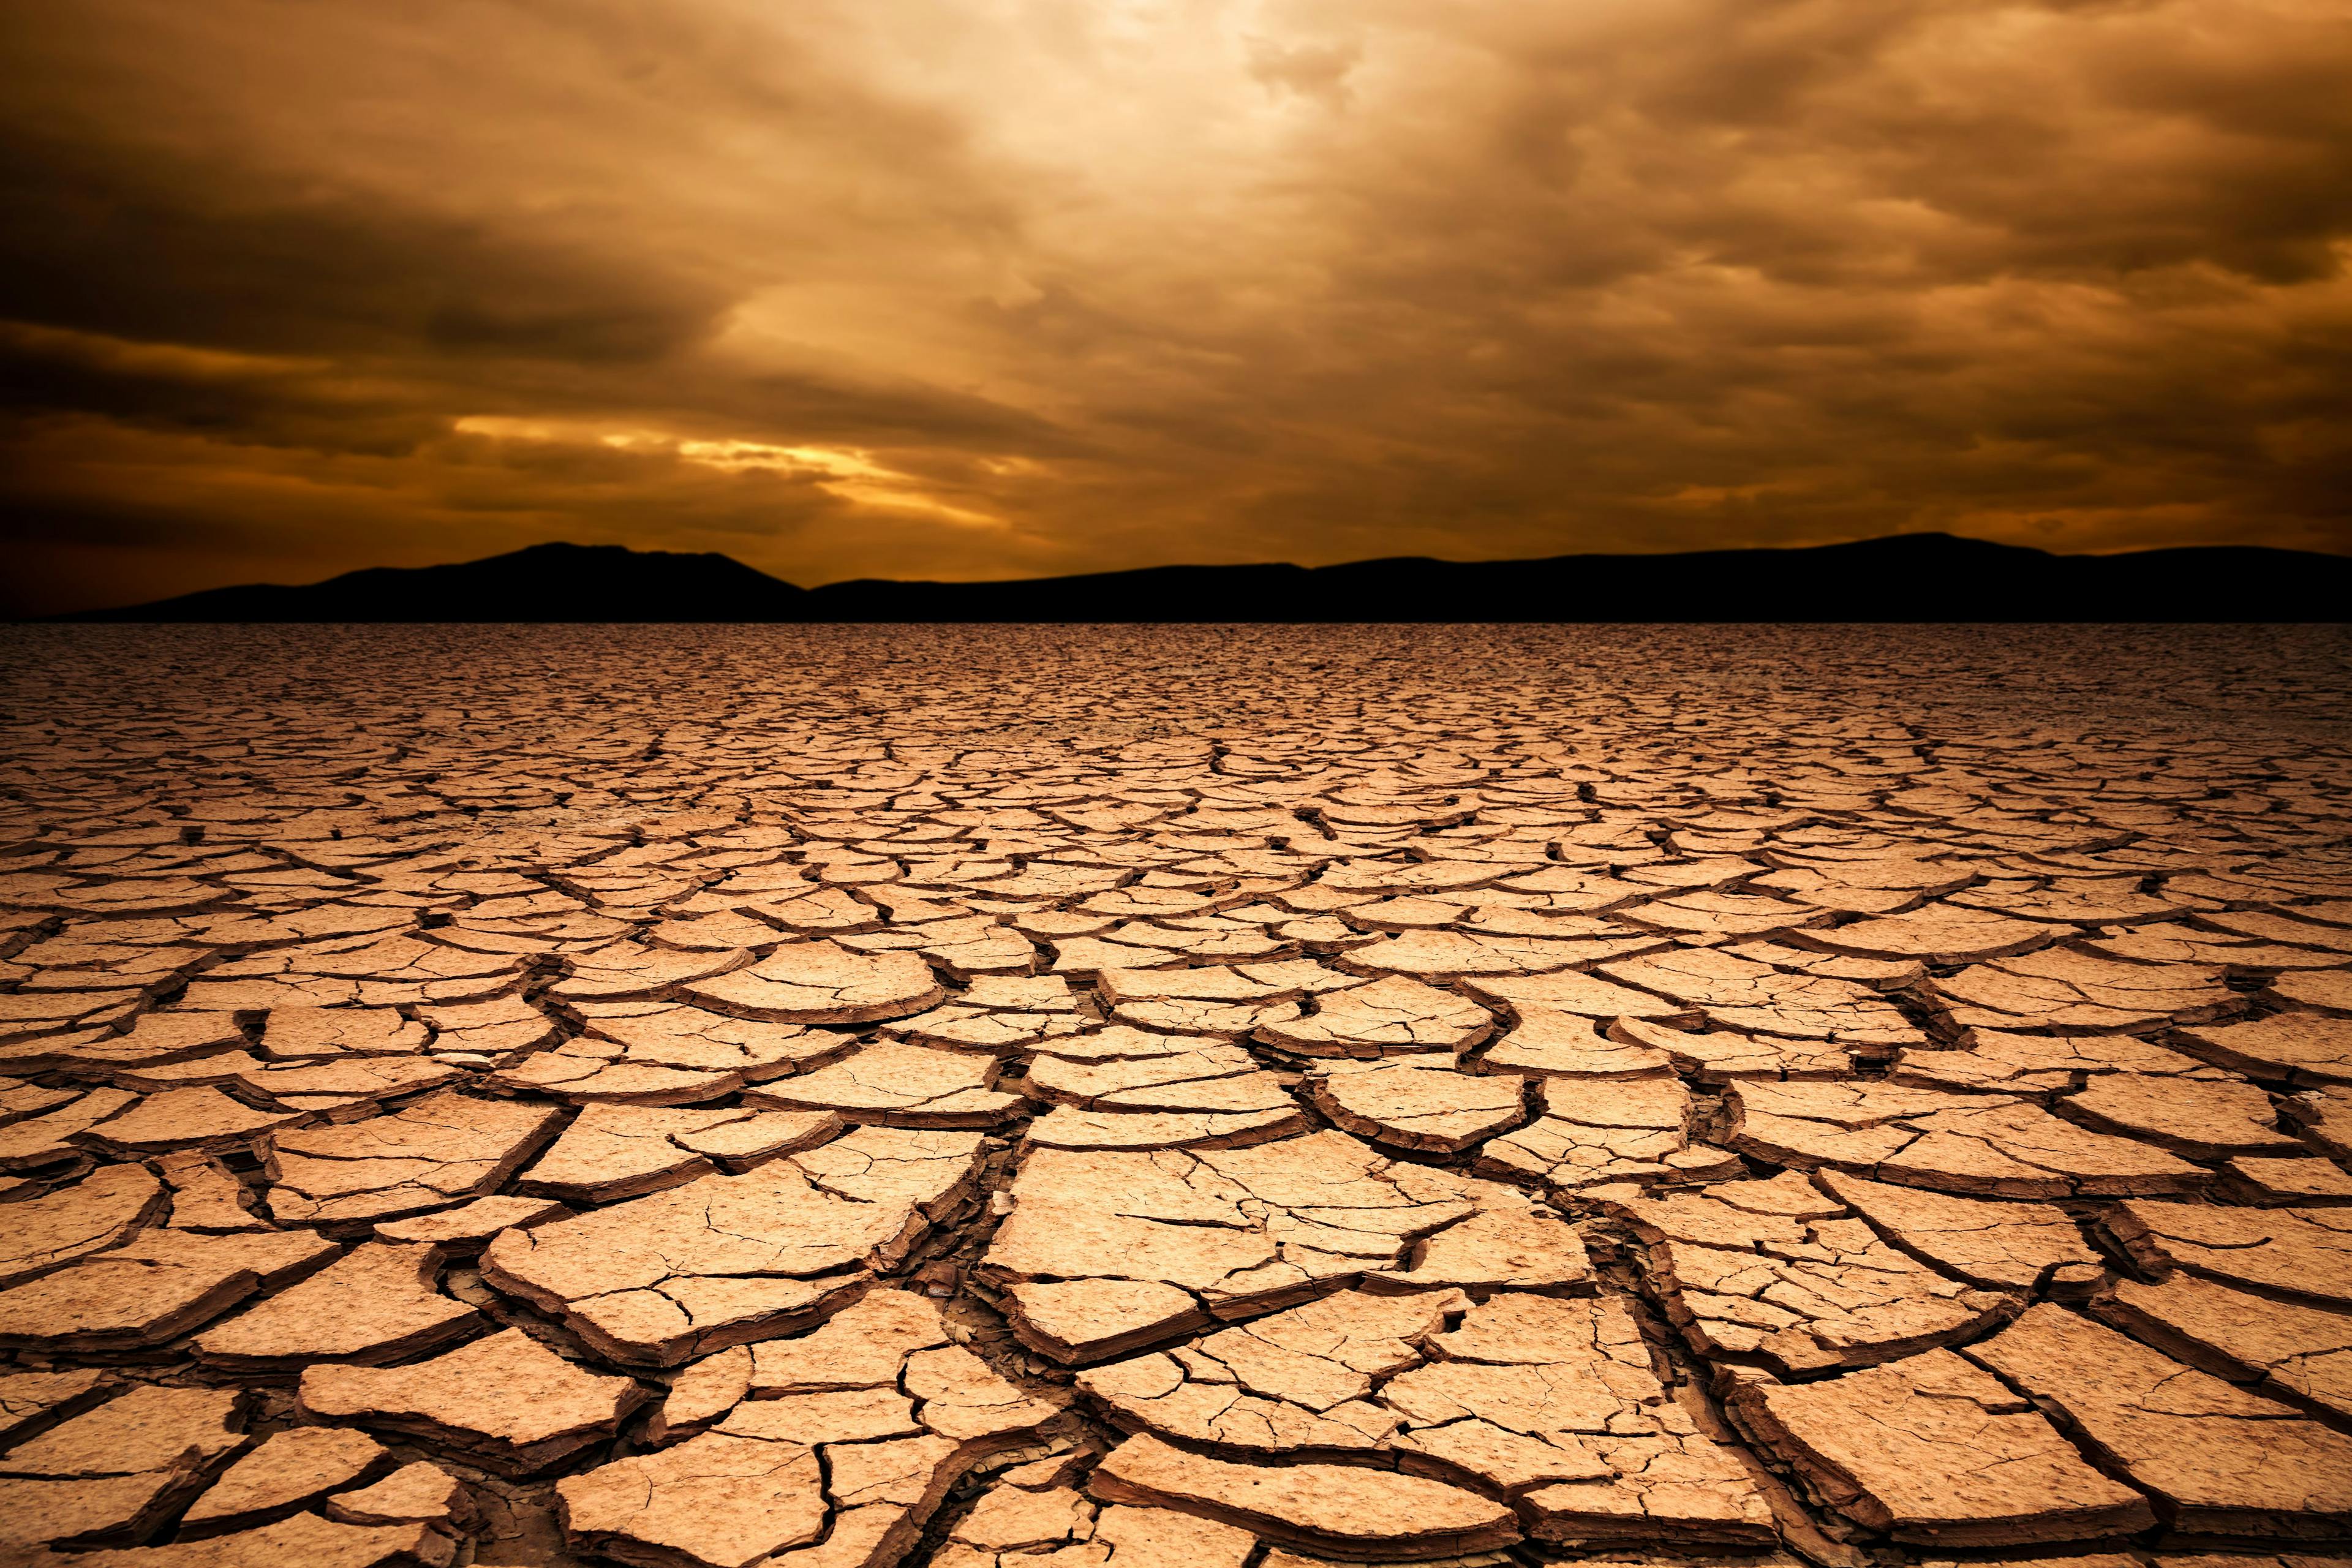 Drought © Jose Ignacio Soto - stock.adobe.com